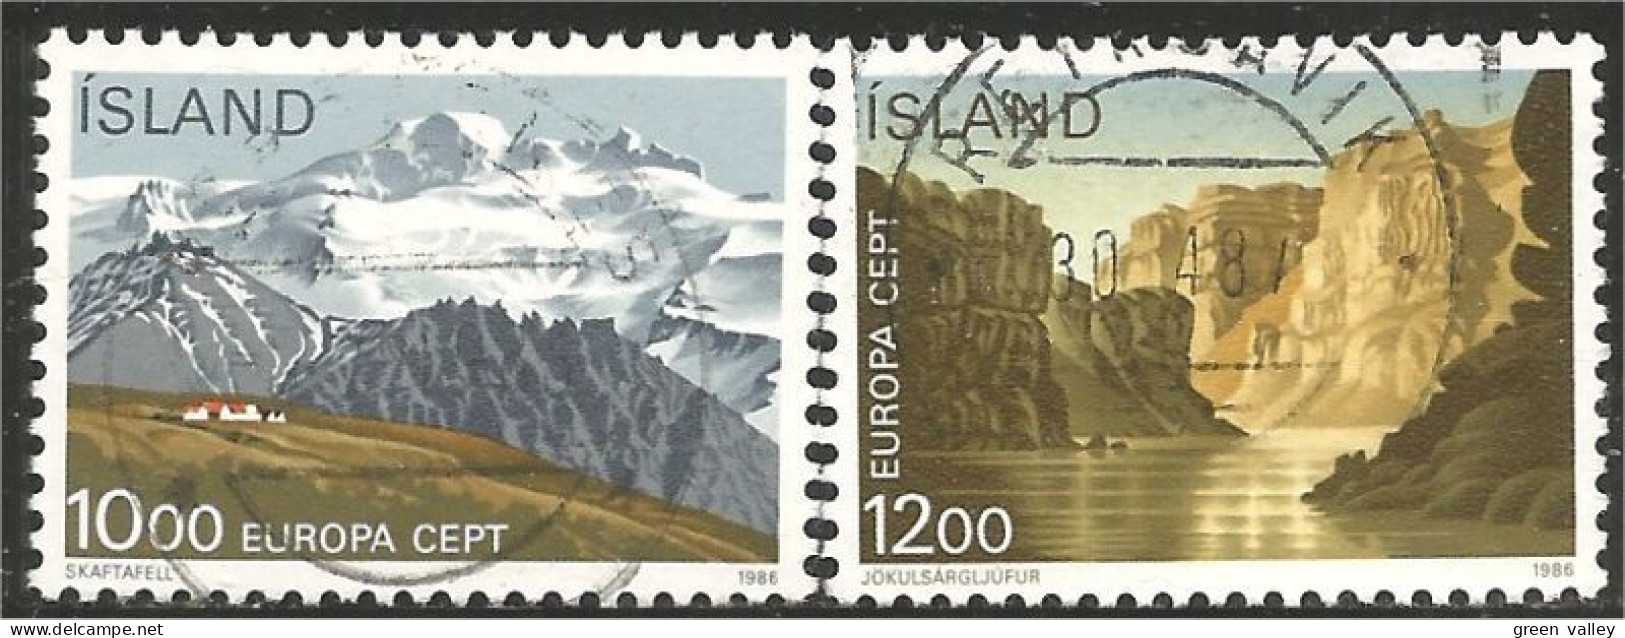 EU86-48c EUROPA CEPT 1986 Iceland Paysages Landscapes - Used Stamps